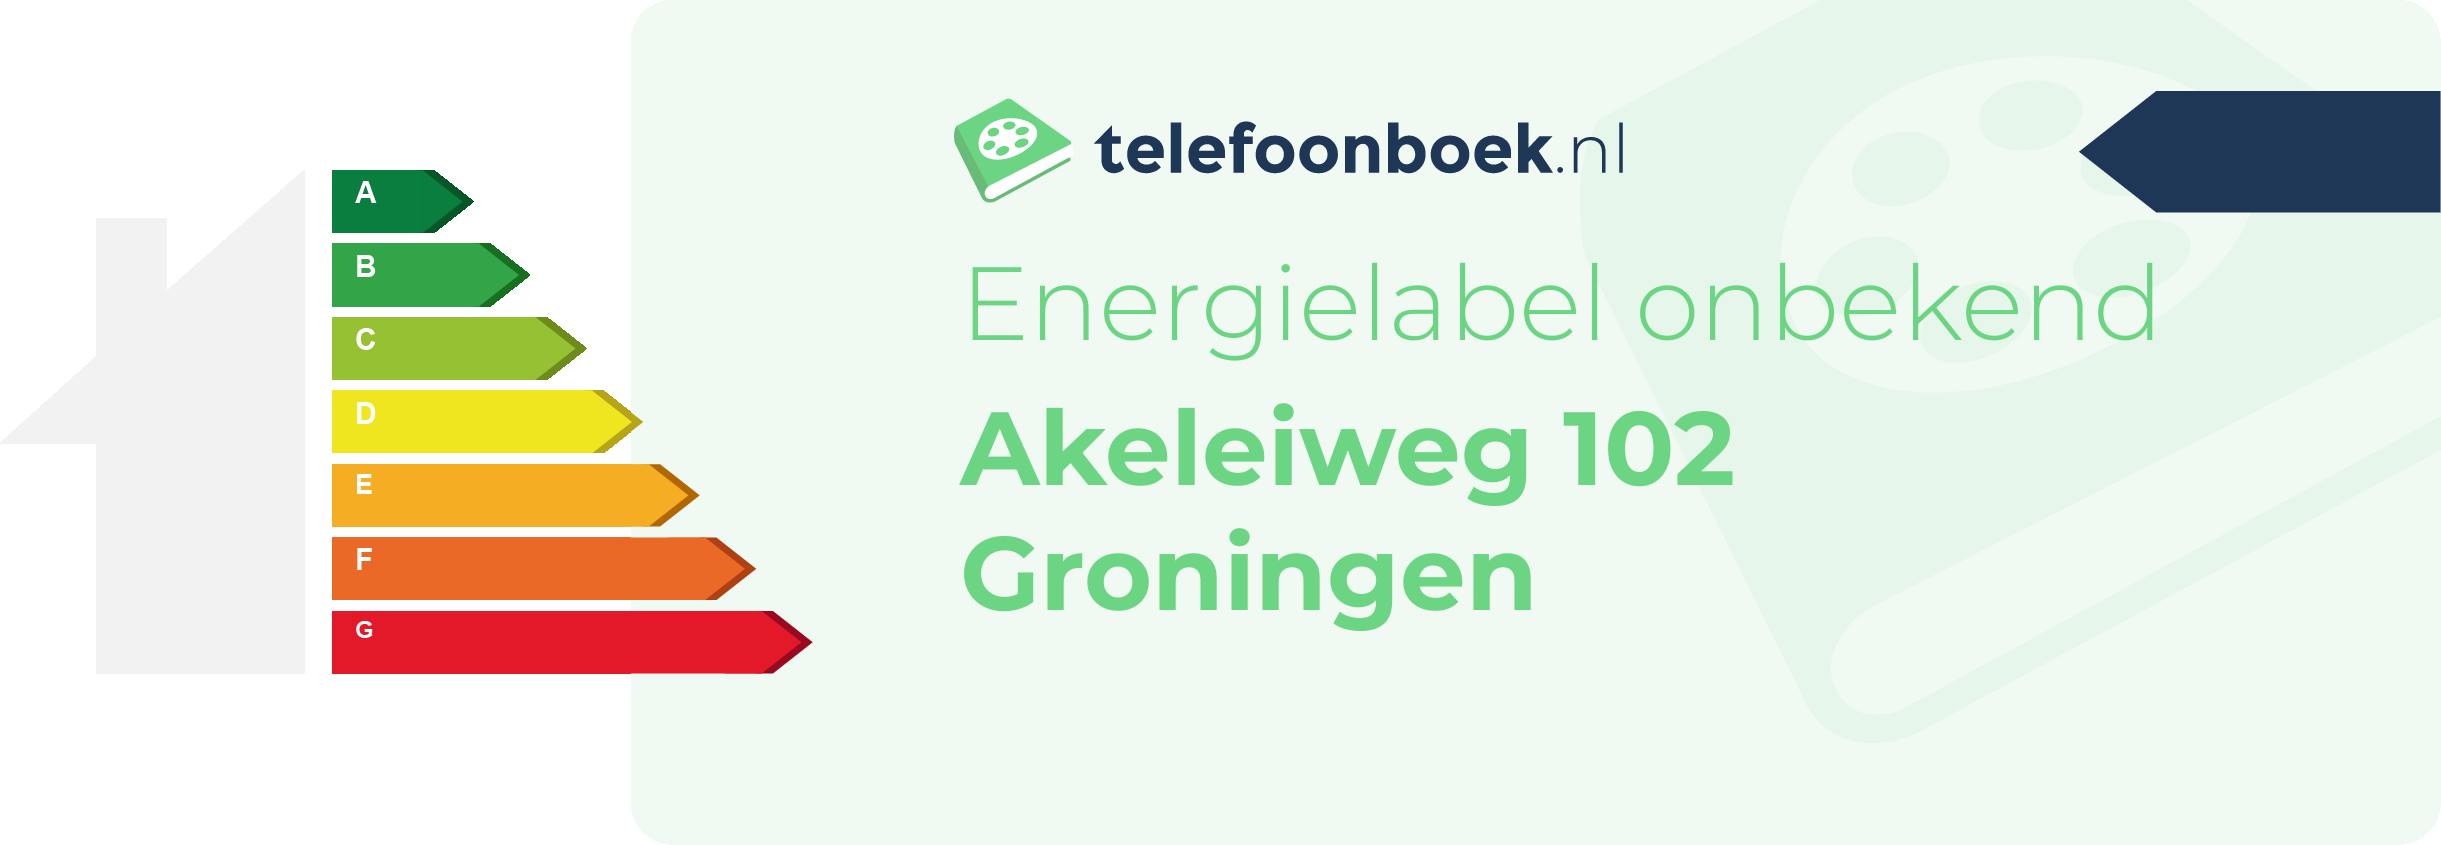 Energielabel Akeleiweg 102 Groningen